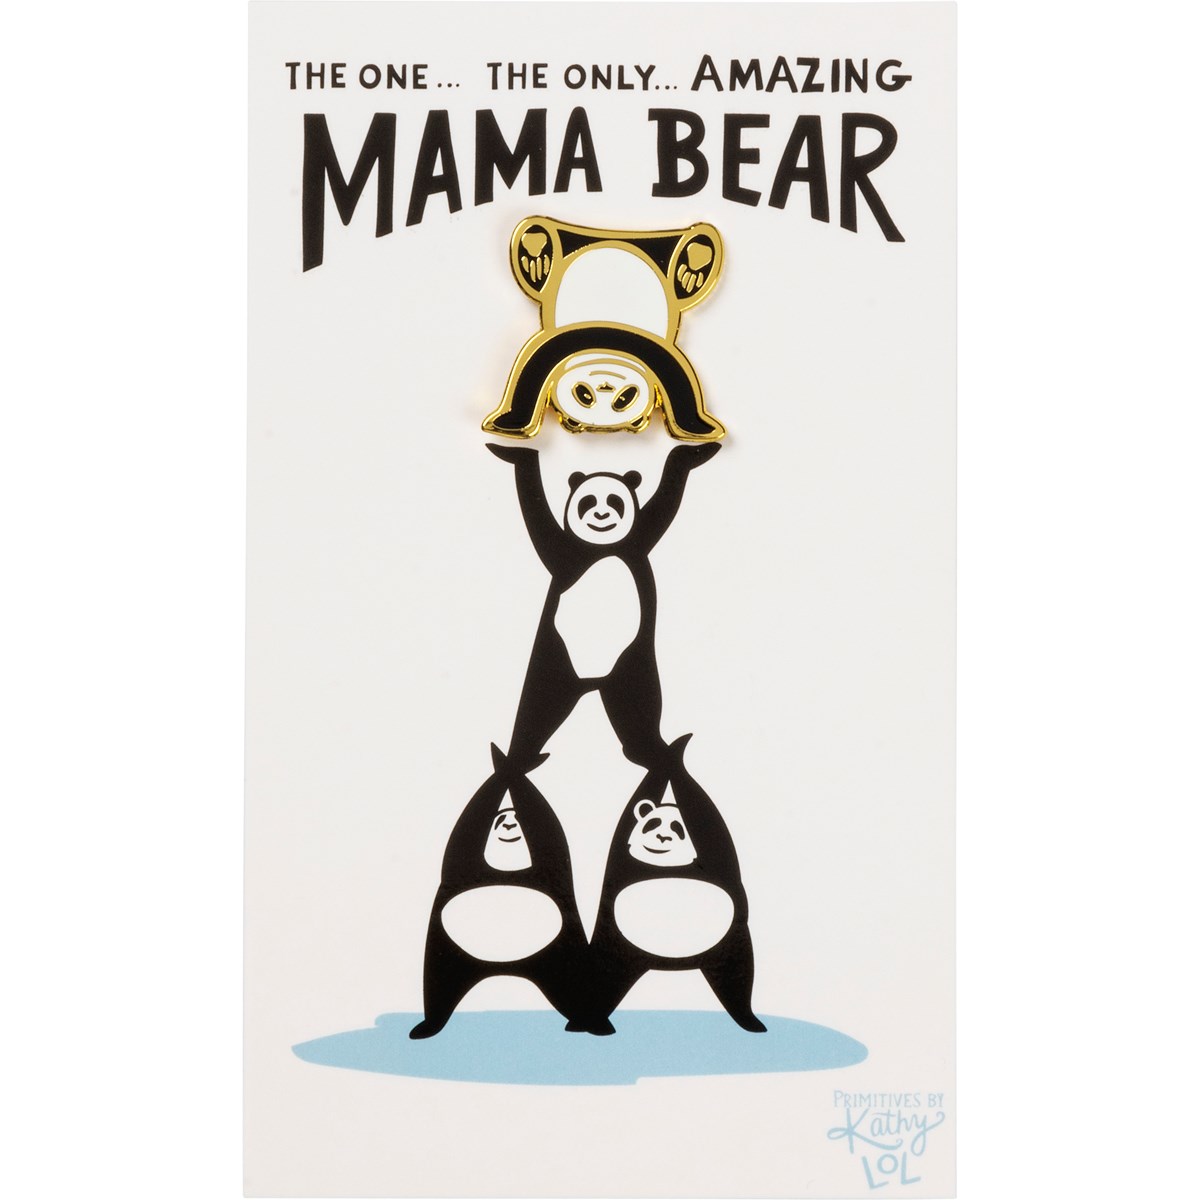 Enamel Pin - Amazing Mama Bear - Pin: 1" x 1", Card: 3" x 5" - Metal, Enamel, Paper